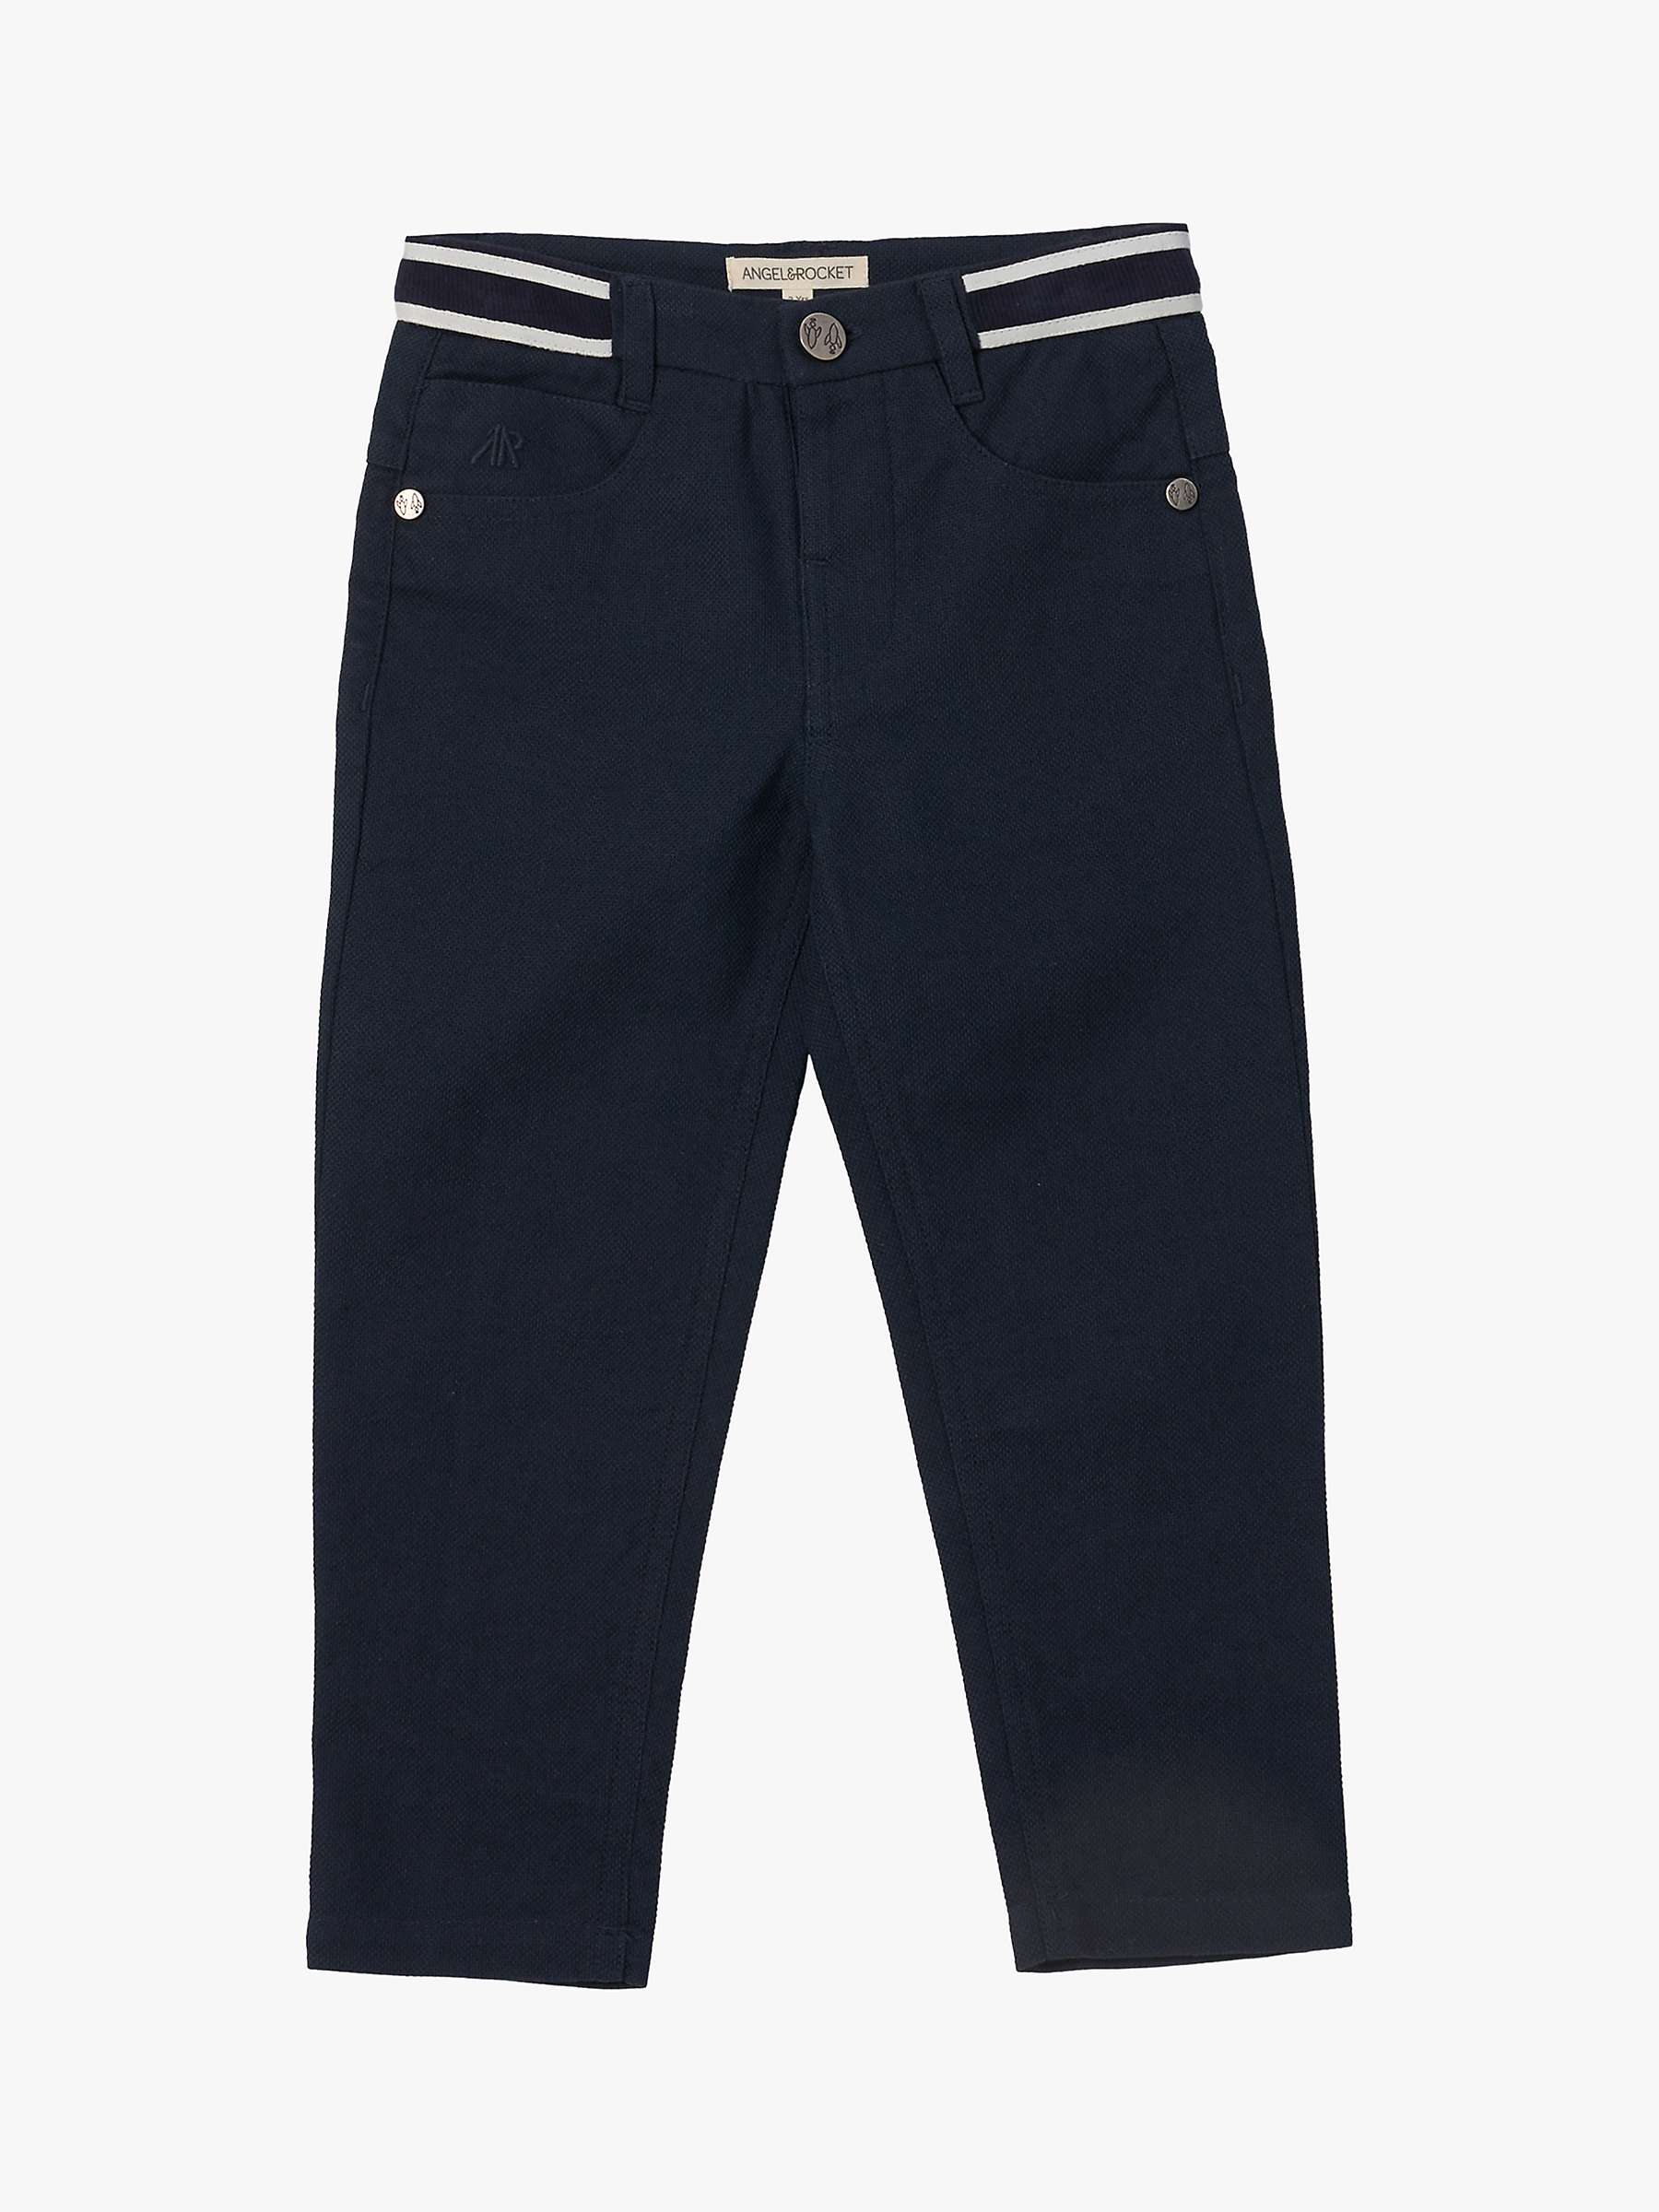 Buy Angel & Rocket Kids' Bernard Smart Textured Trousers, Navy Online at johnlewis.com